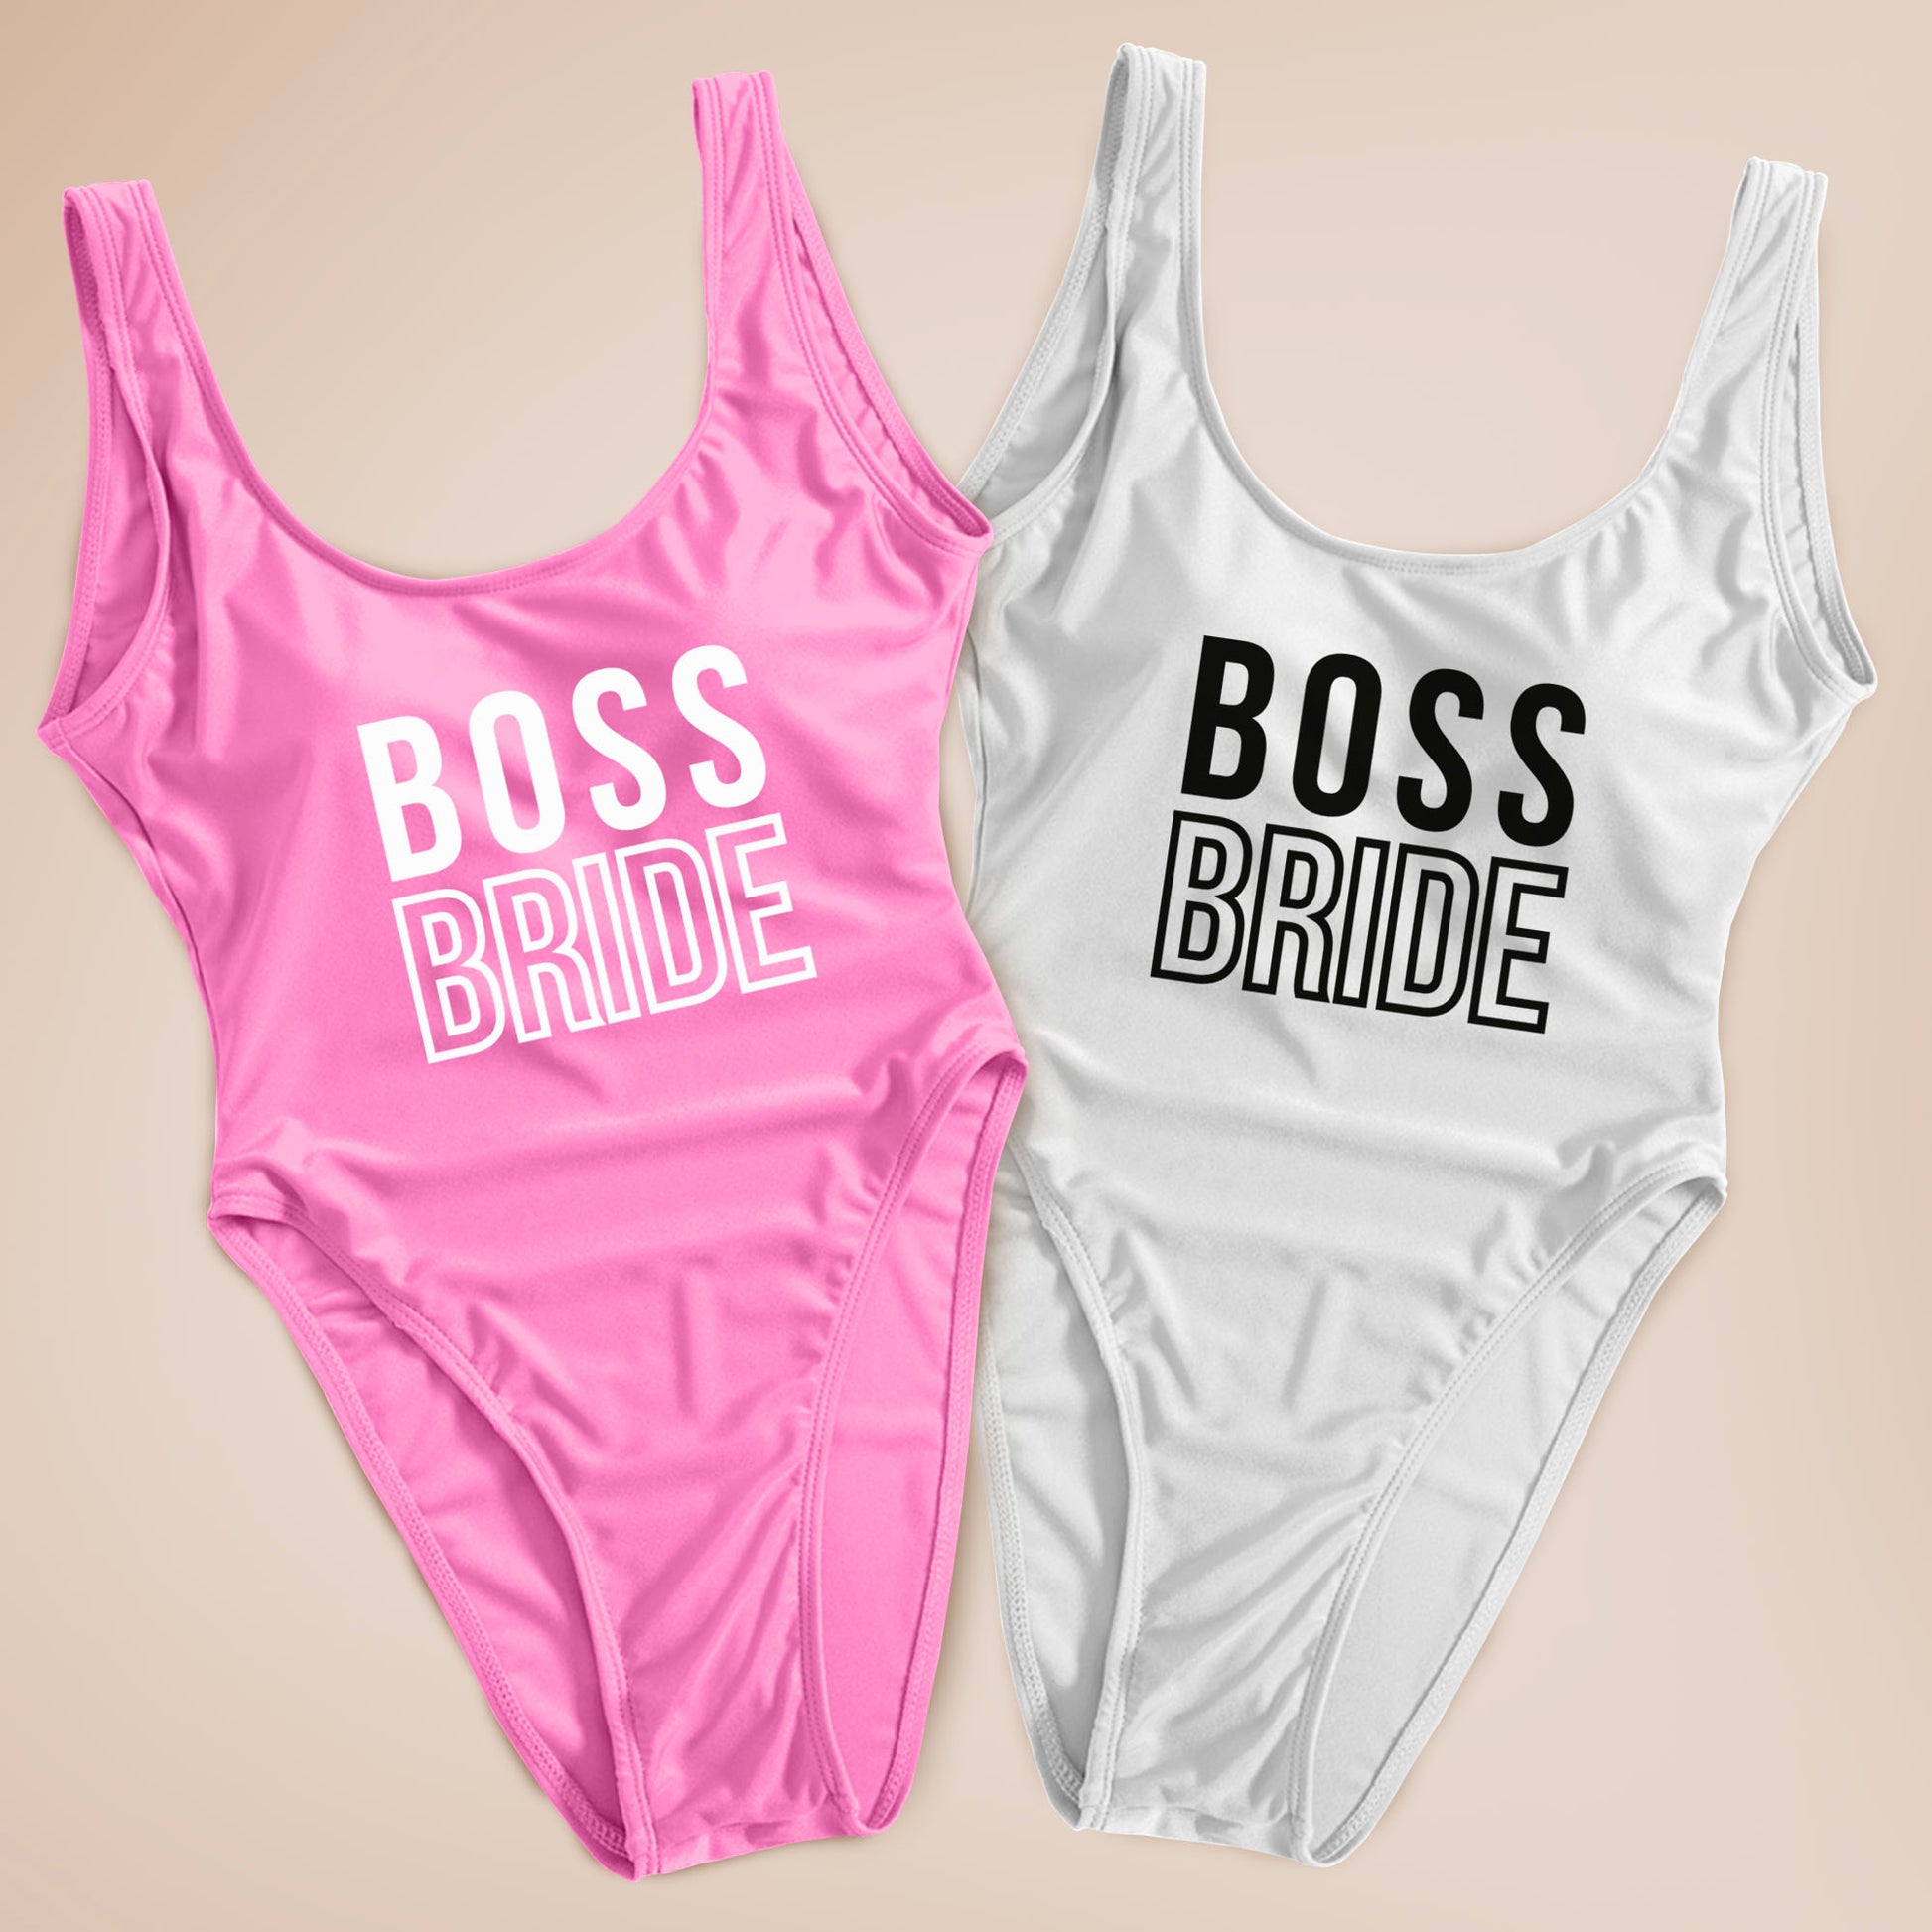 Boss Bride Swimsuit